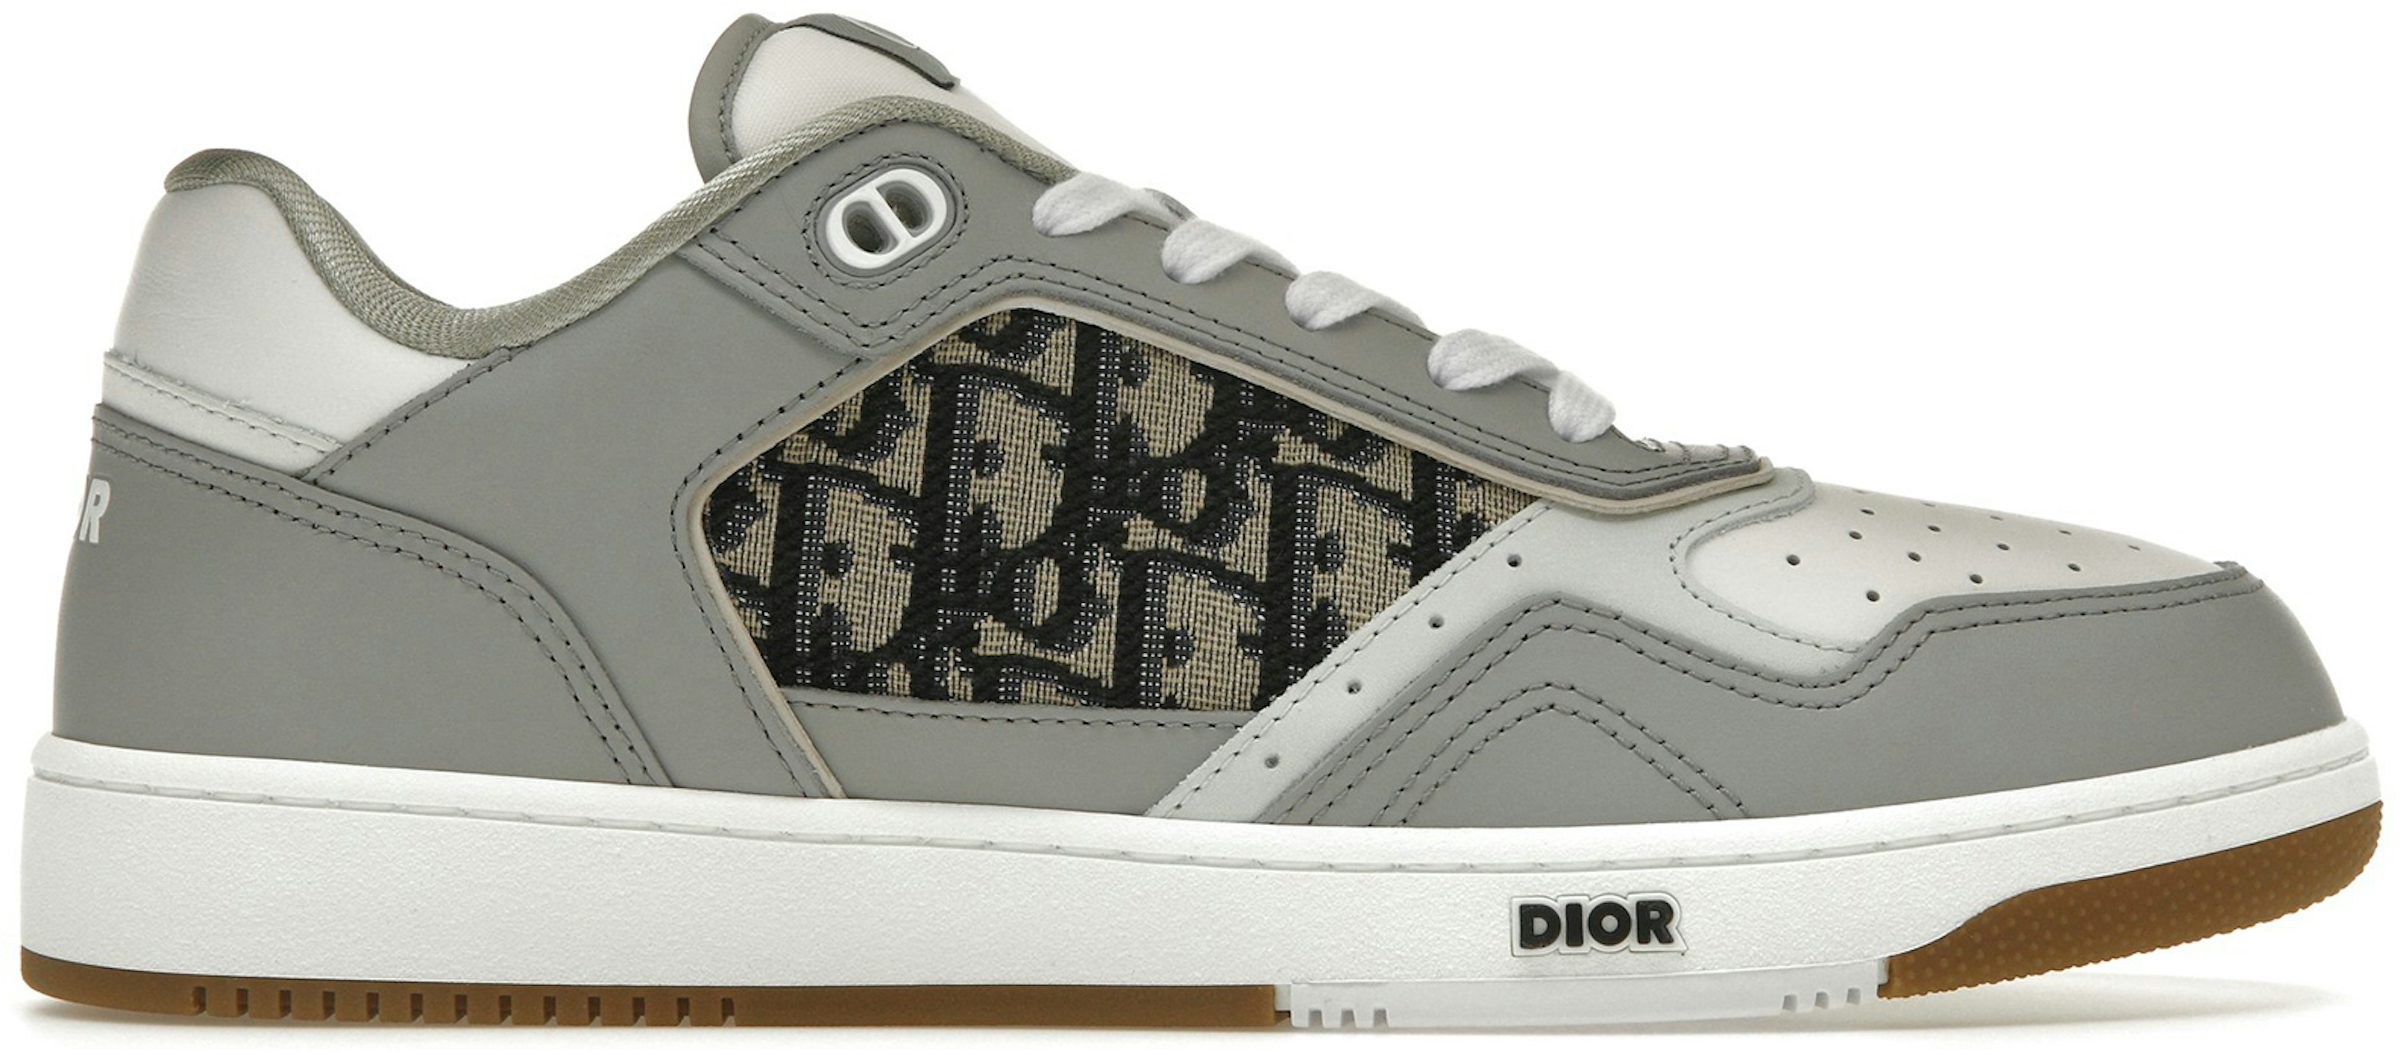 Dior Men's Sneakers - Grey - US 10.5